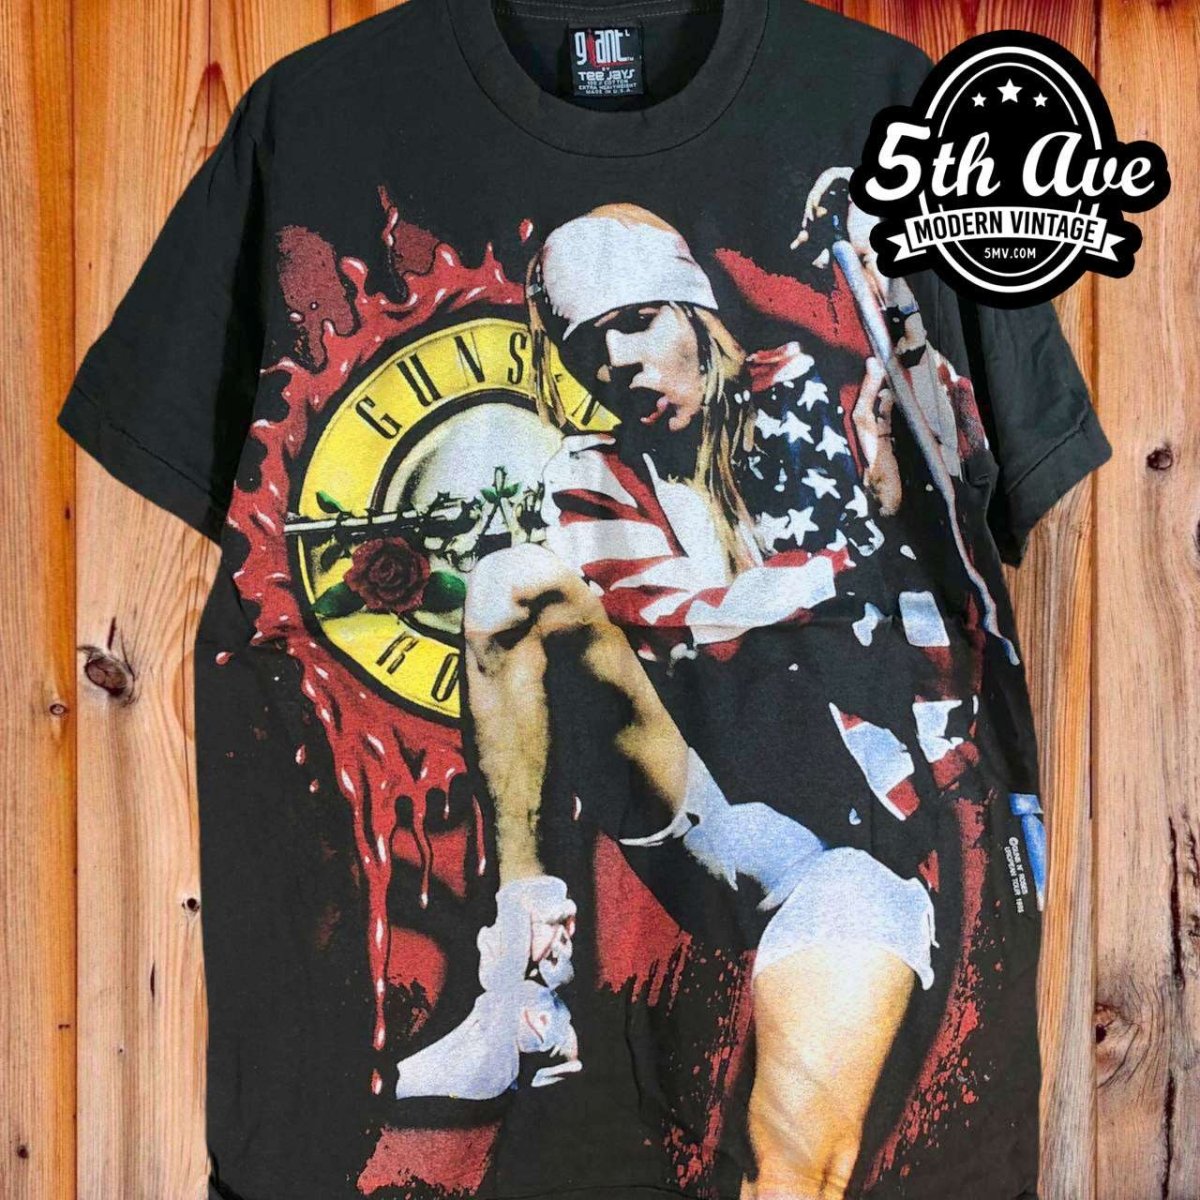 Rebel Rockers Unite: Bootleg Guns N' Roses All-Over Print Single Stitch t shirt Featuring Axl Rose - Vintage Band Shirts